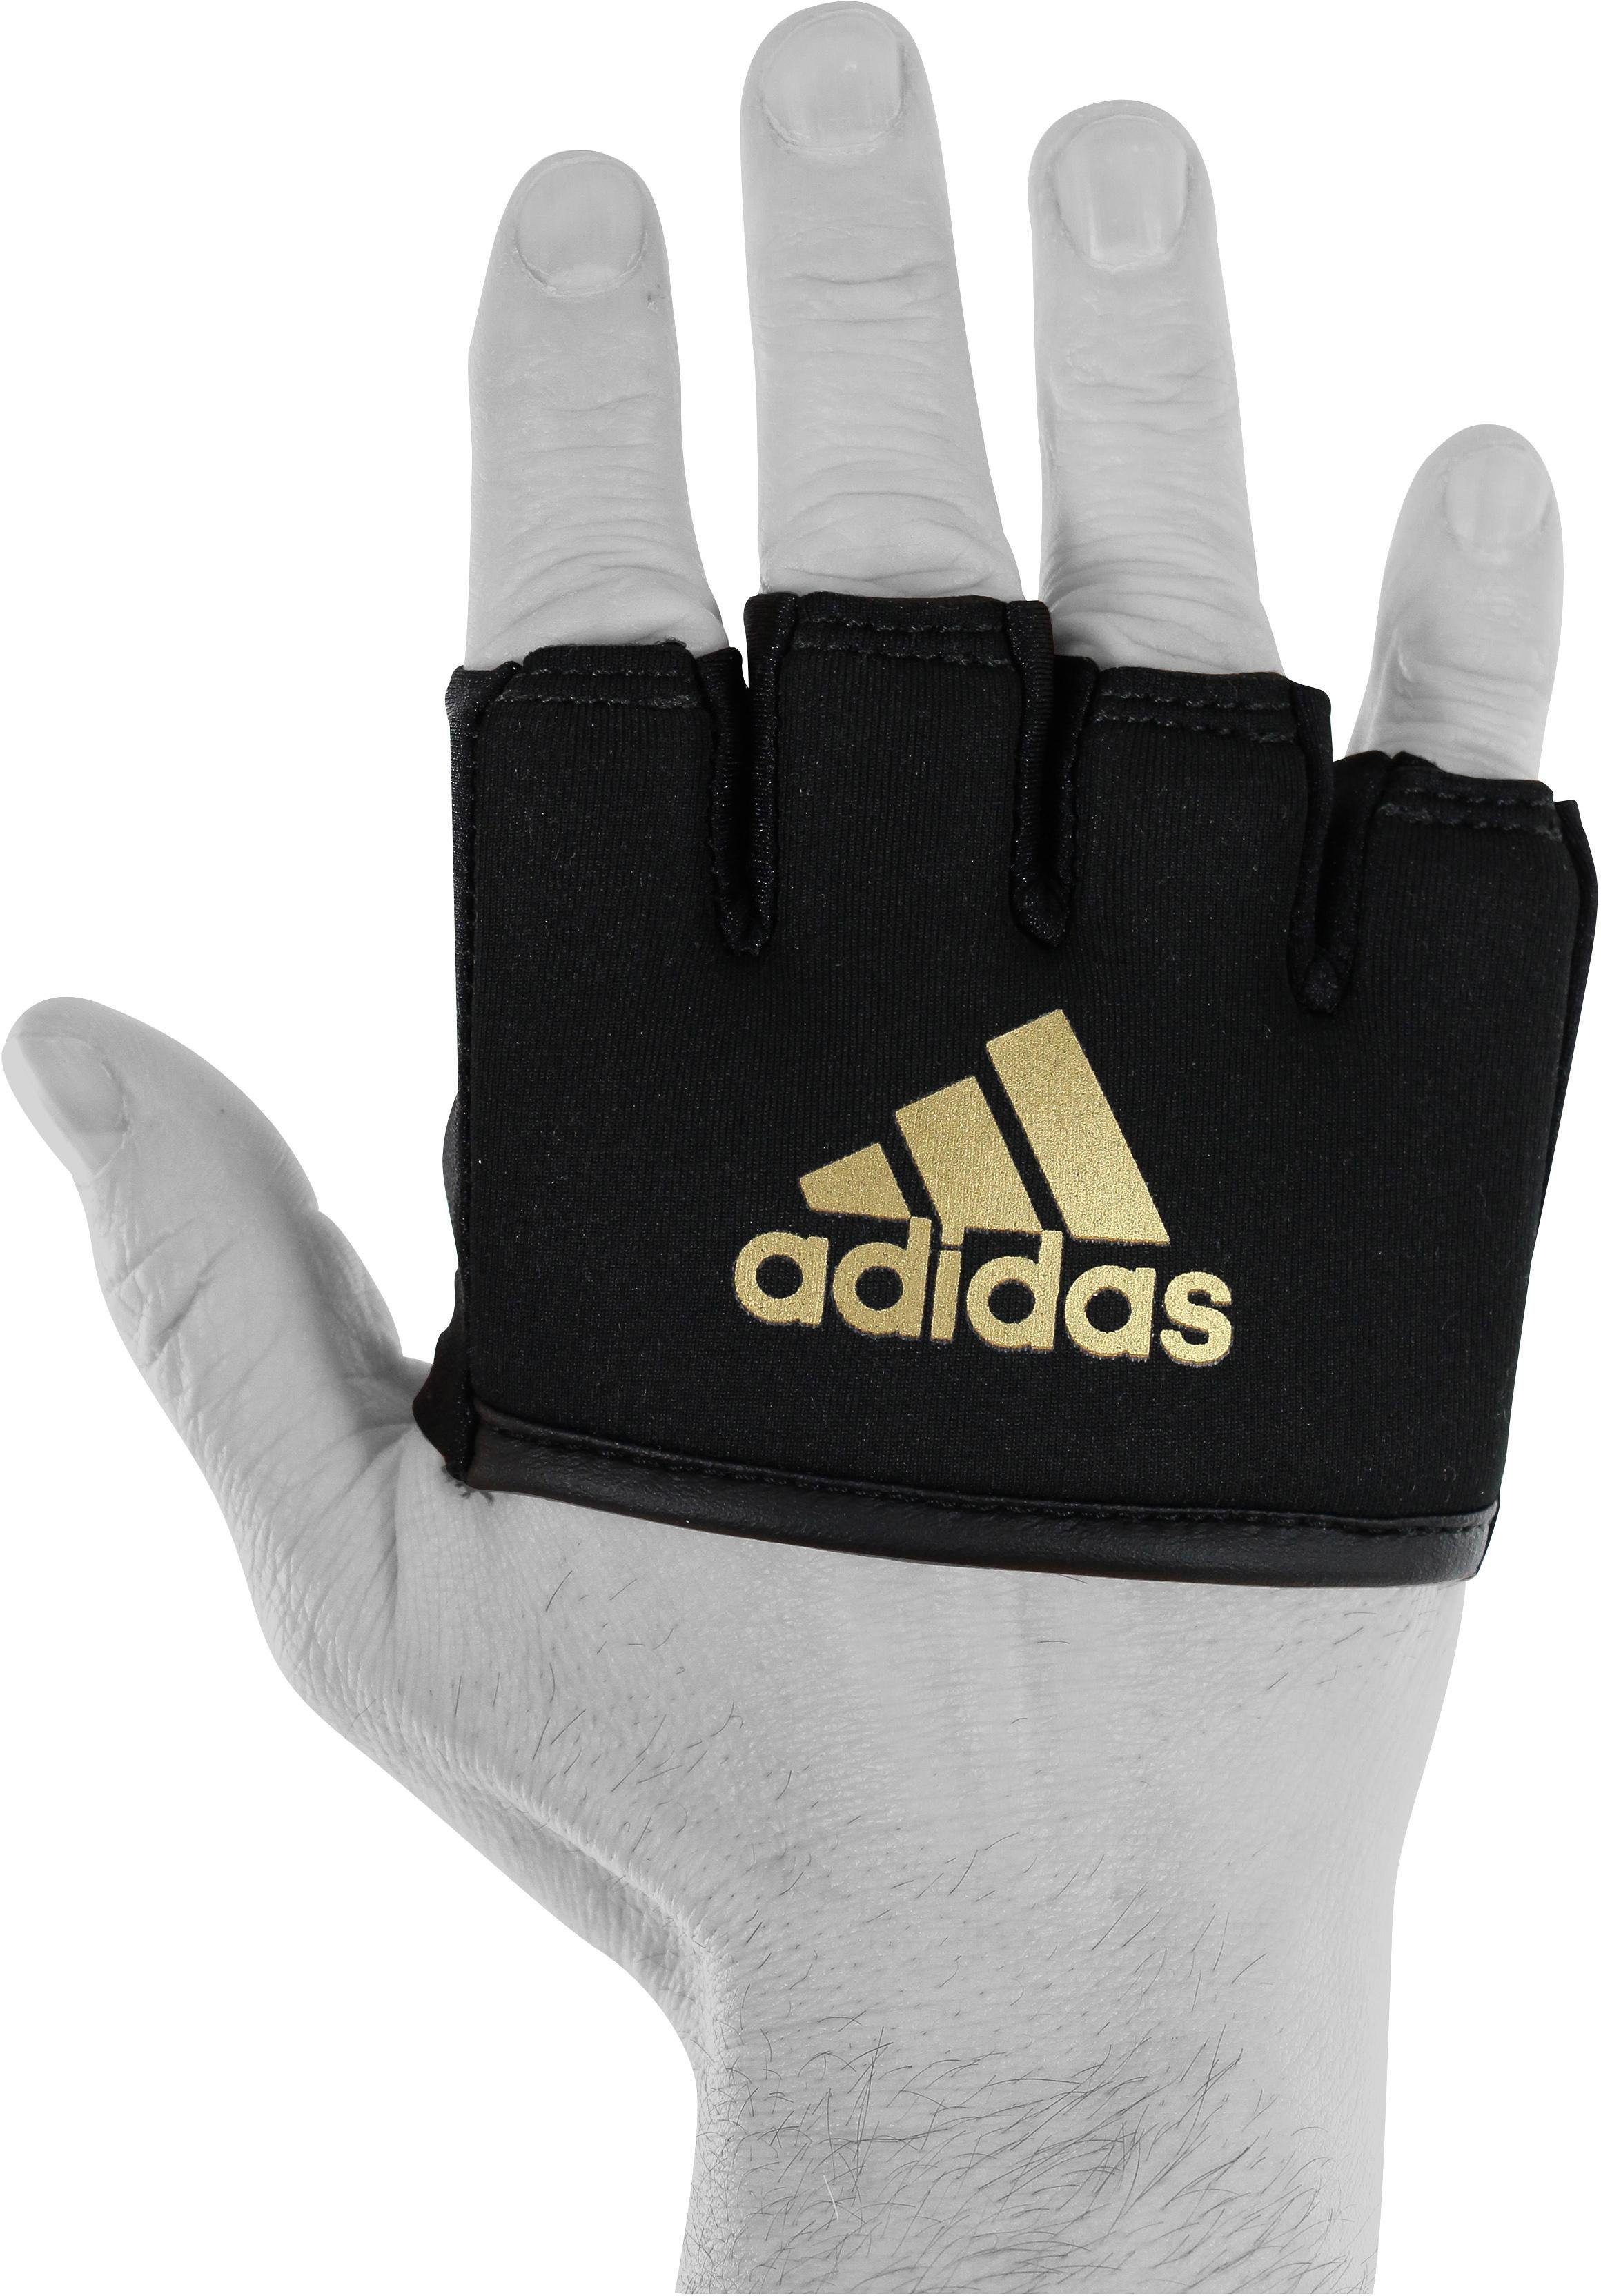 Sleeve Punch-Handschuhe adidas Performance Knuckle